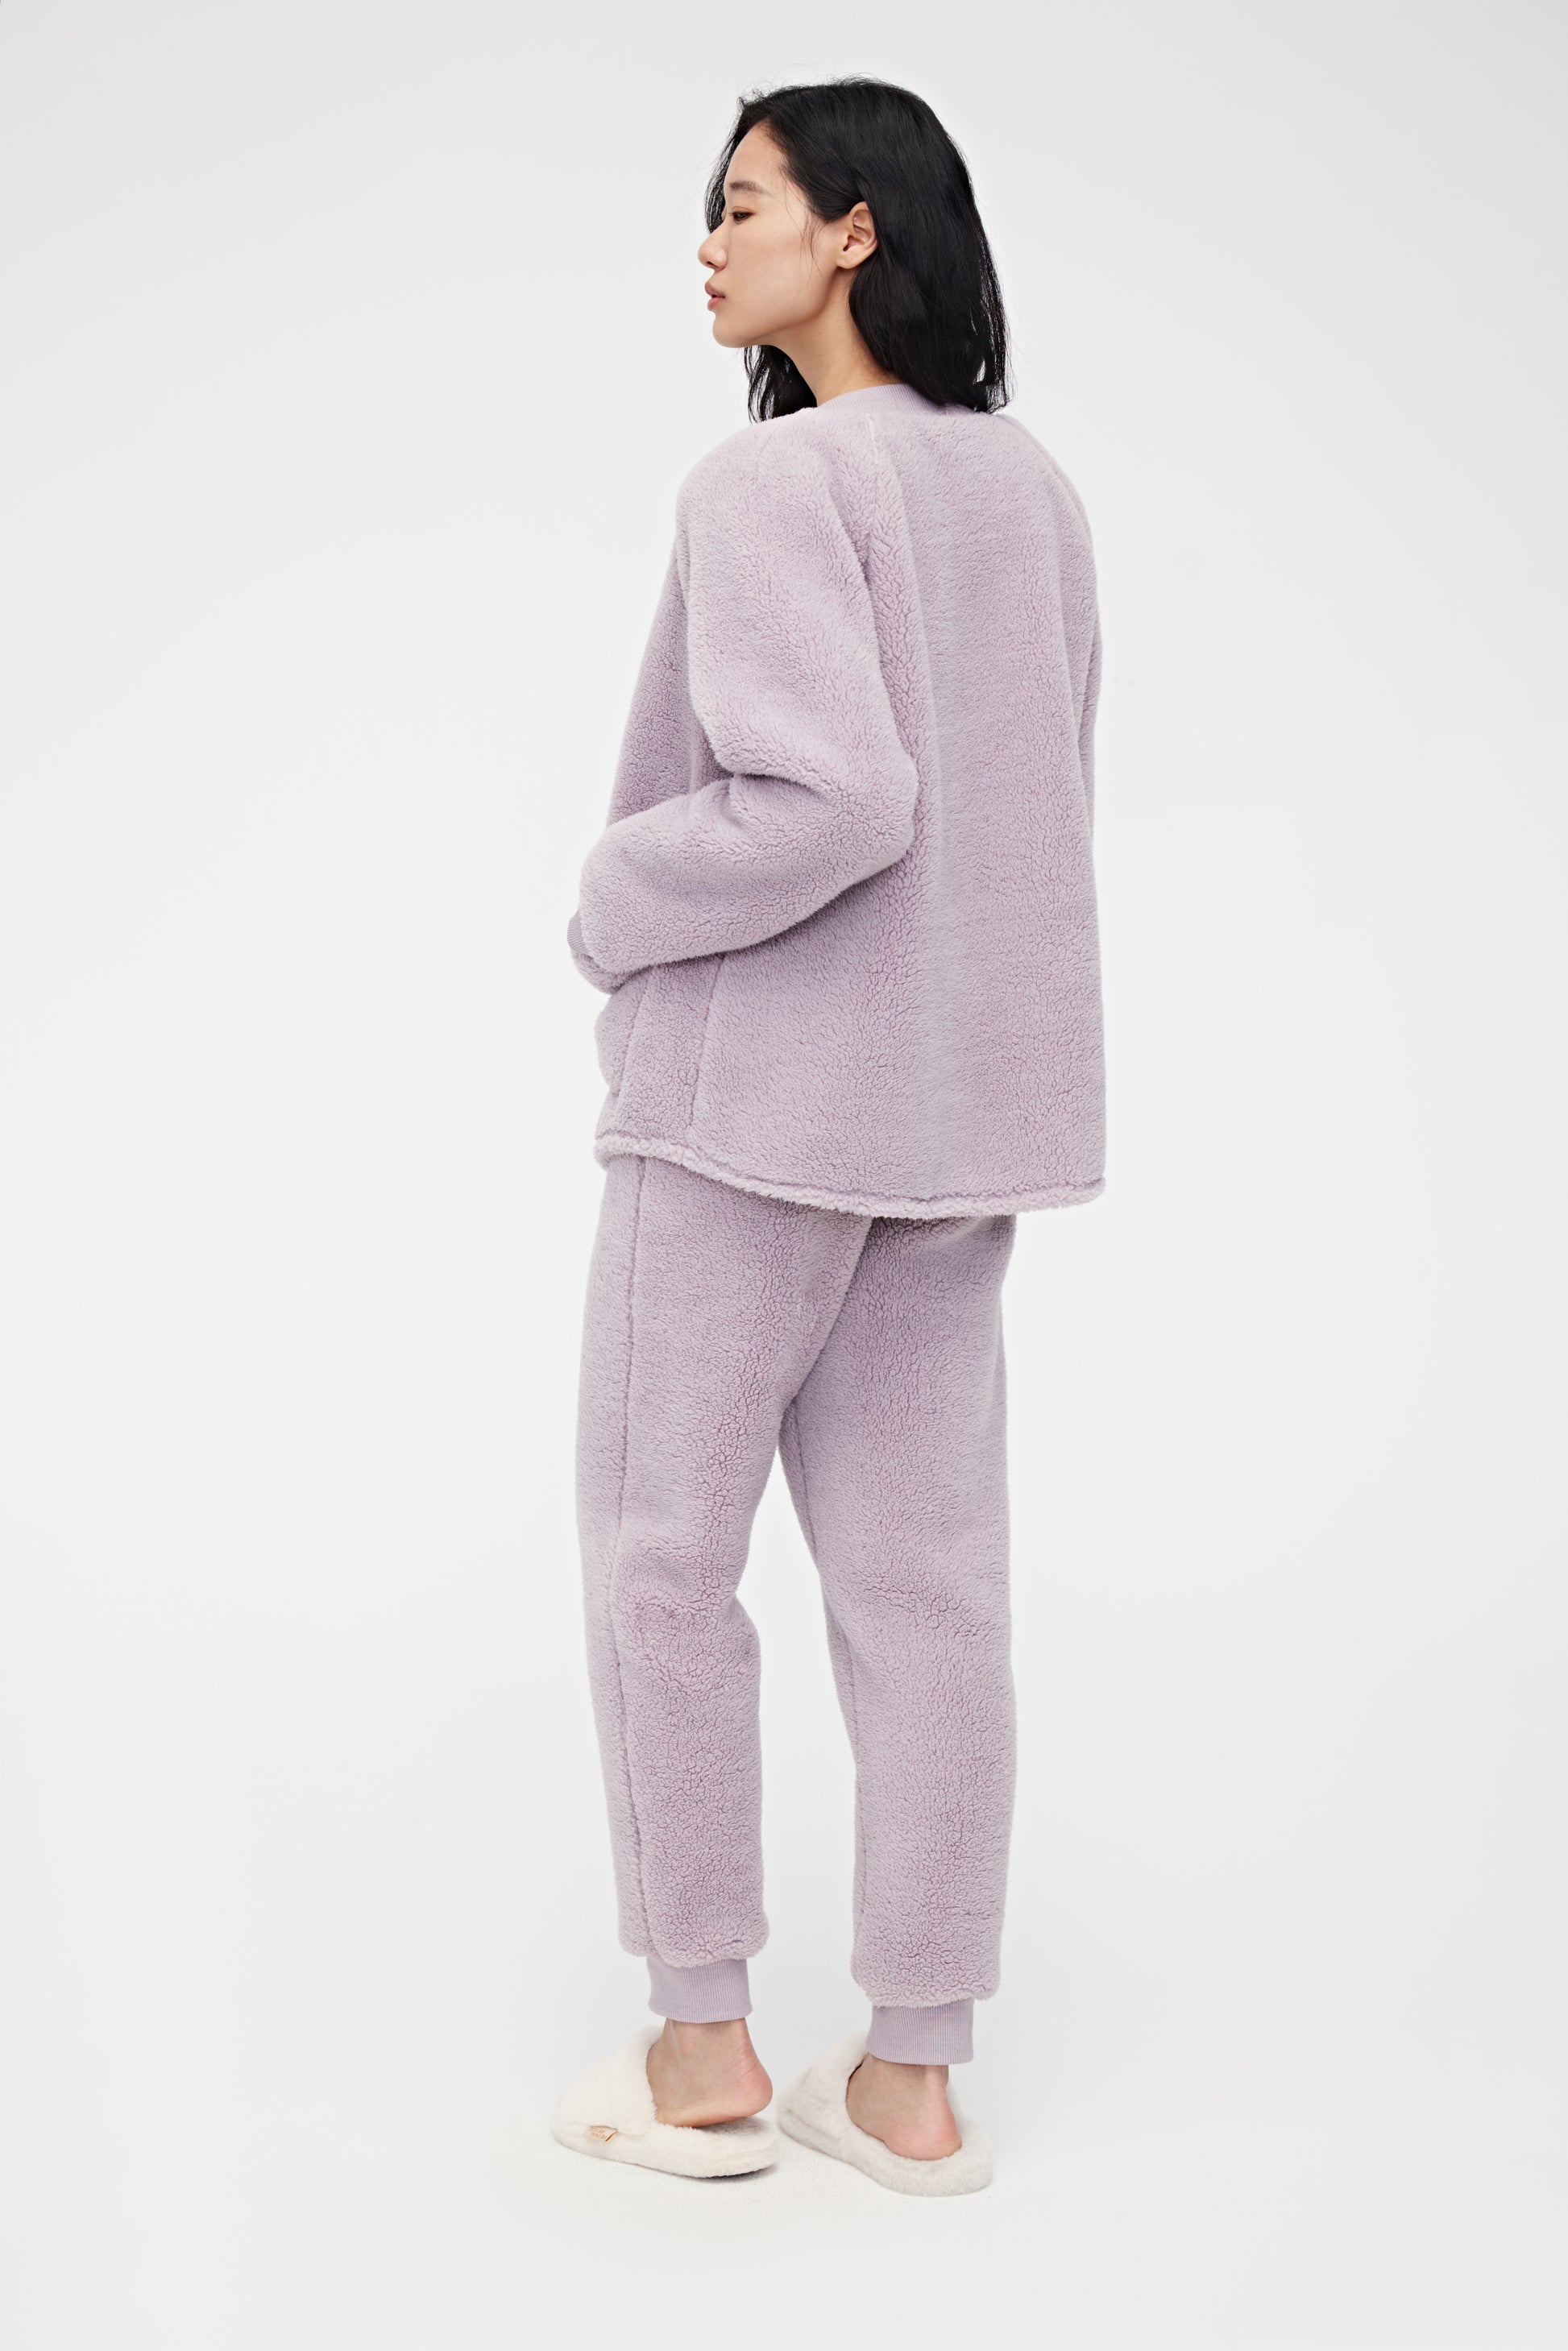 Back view of woman wearing purple Fleece Pajama Set